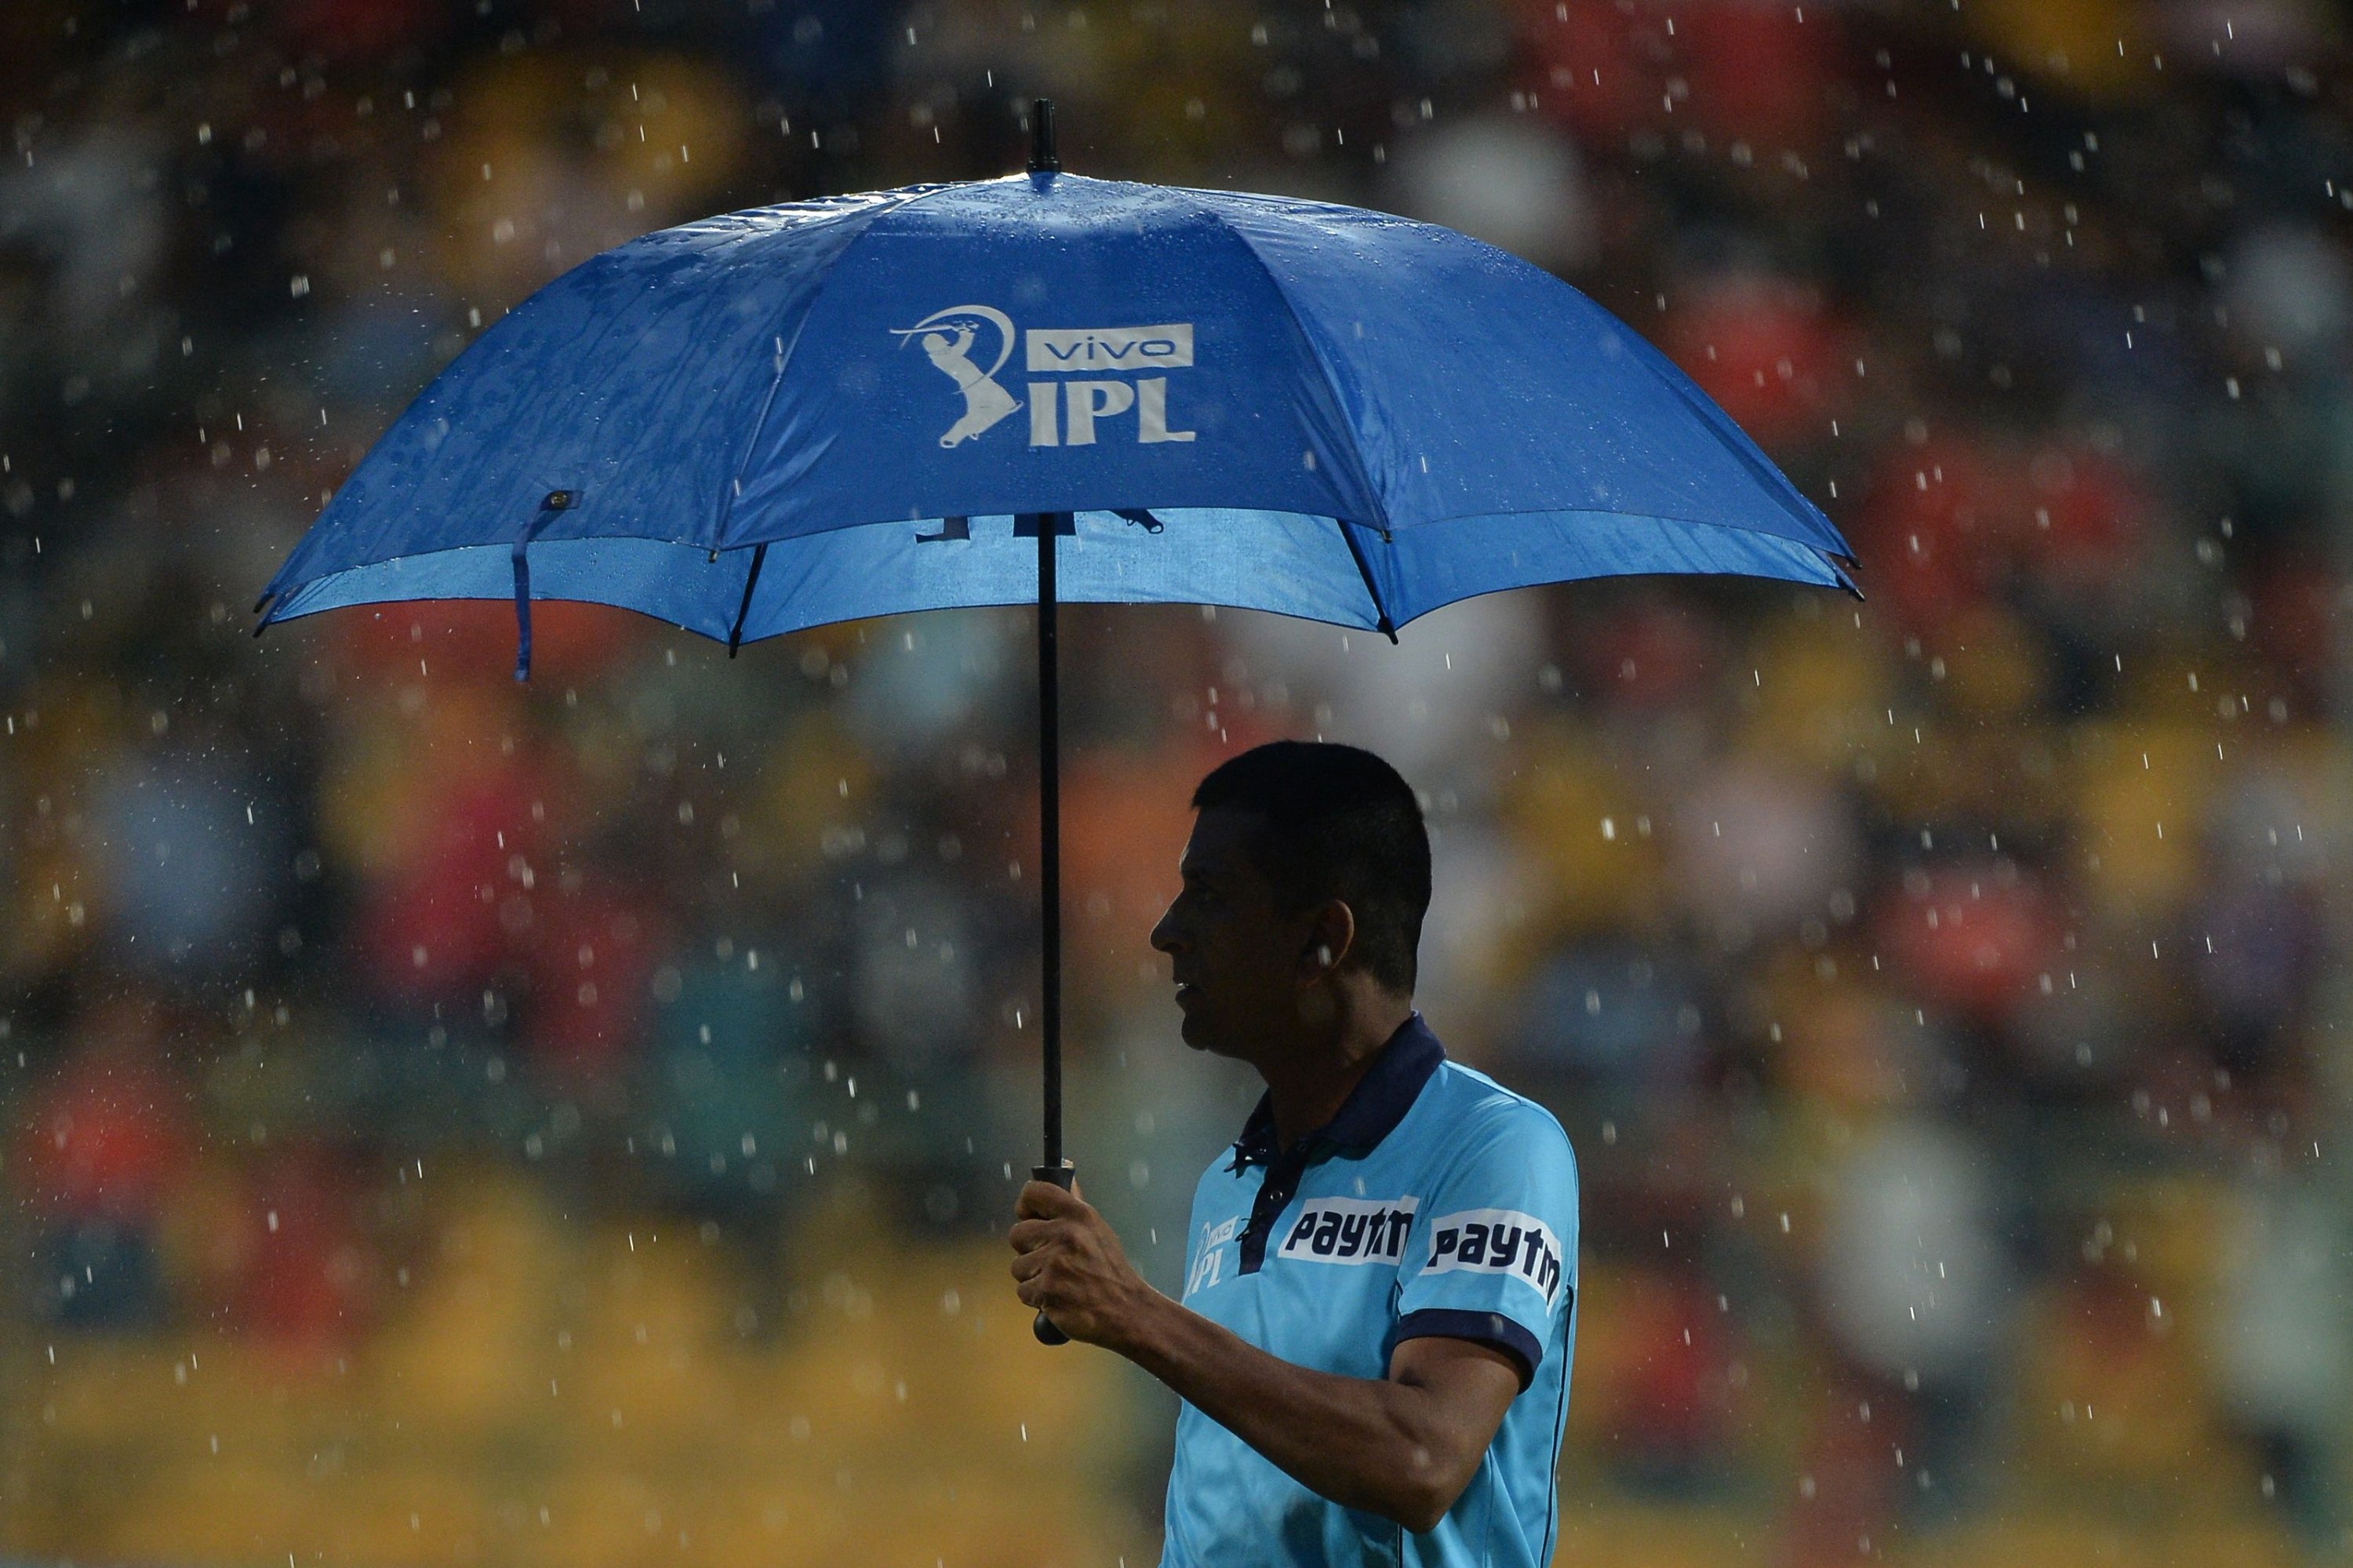 Seorang wasit berjalan ke tanah saat hujan menunda dimulainya pertandingan IPL, Bangalore, India, 30 April 2019. (AFP Photo)